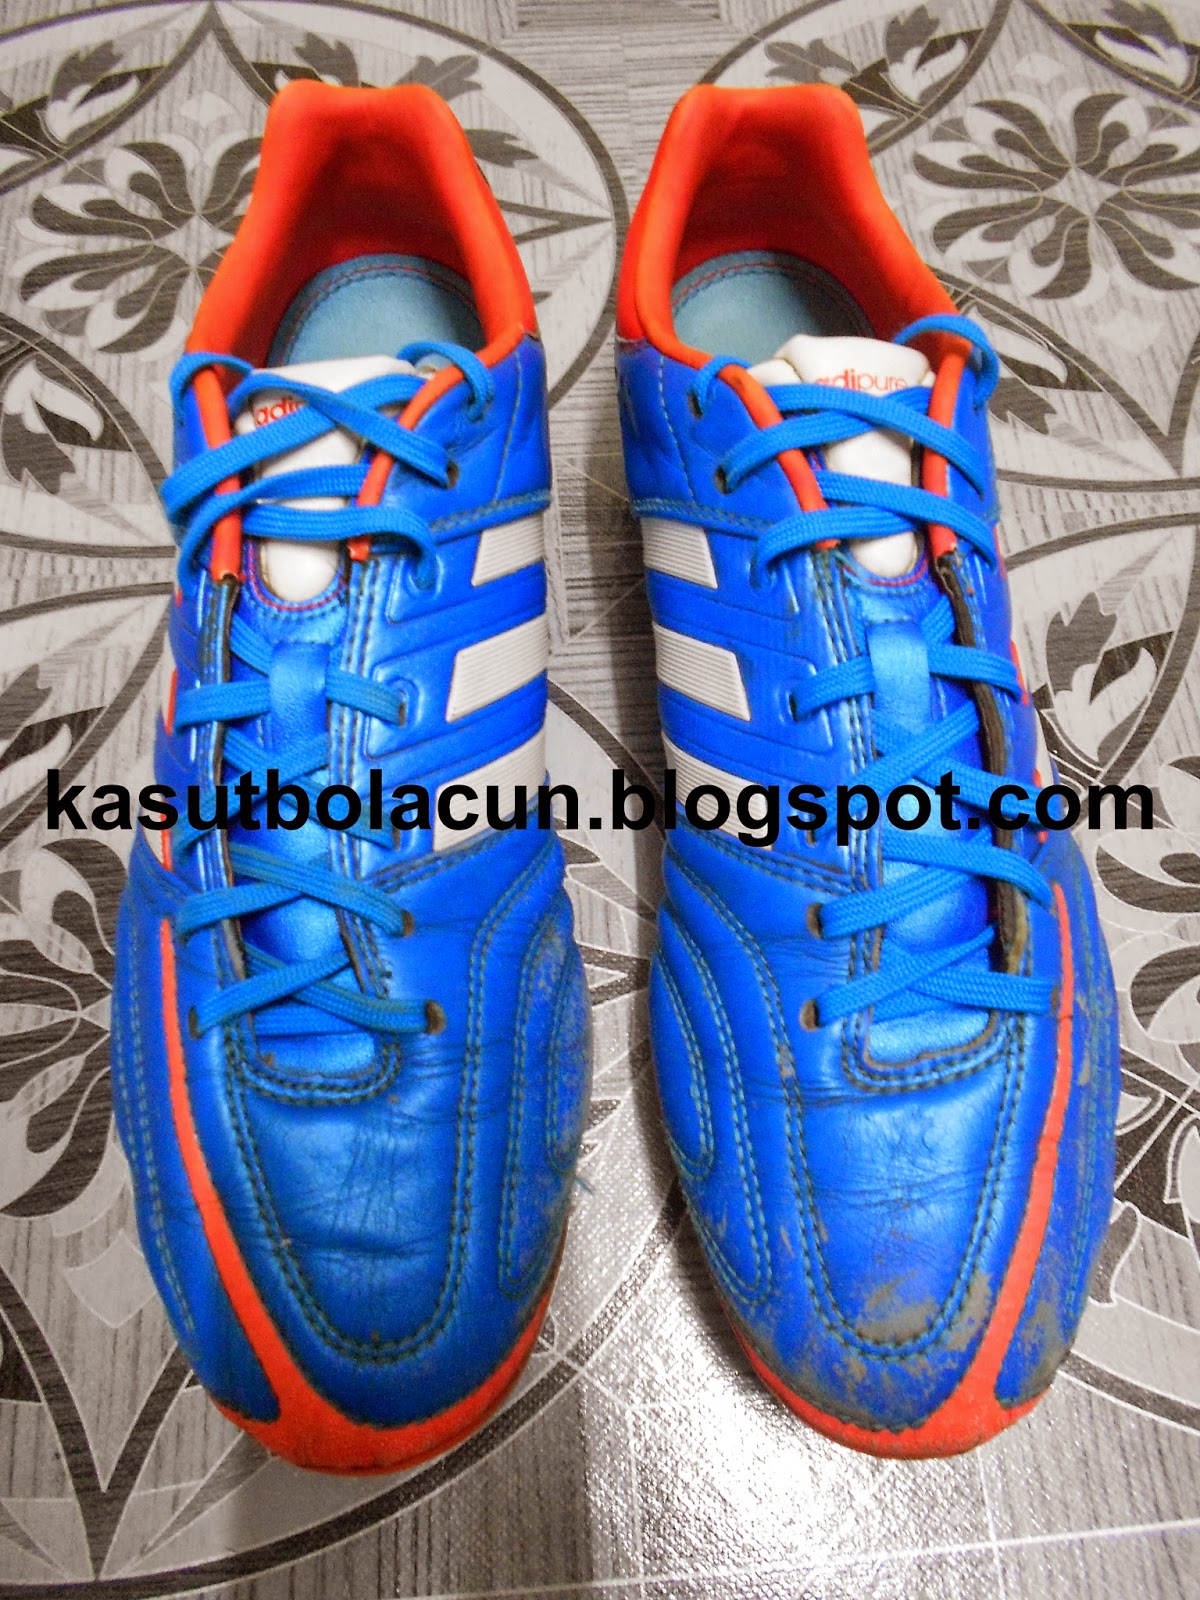  Kasut  Bola  Cun Nice Football Boots Adidas Adipure 11pro FG